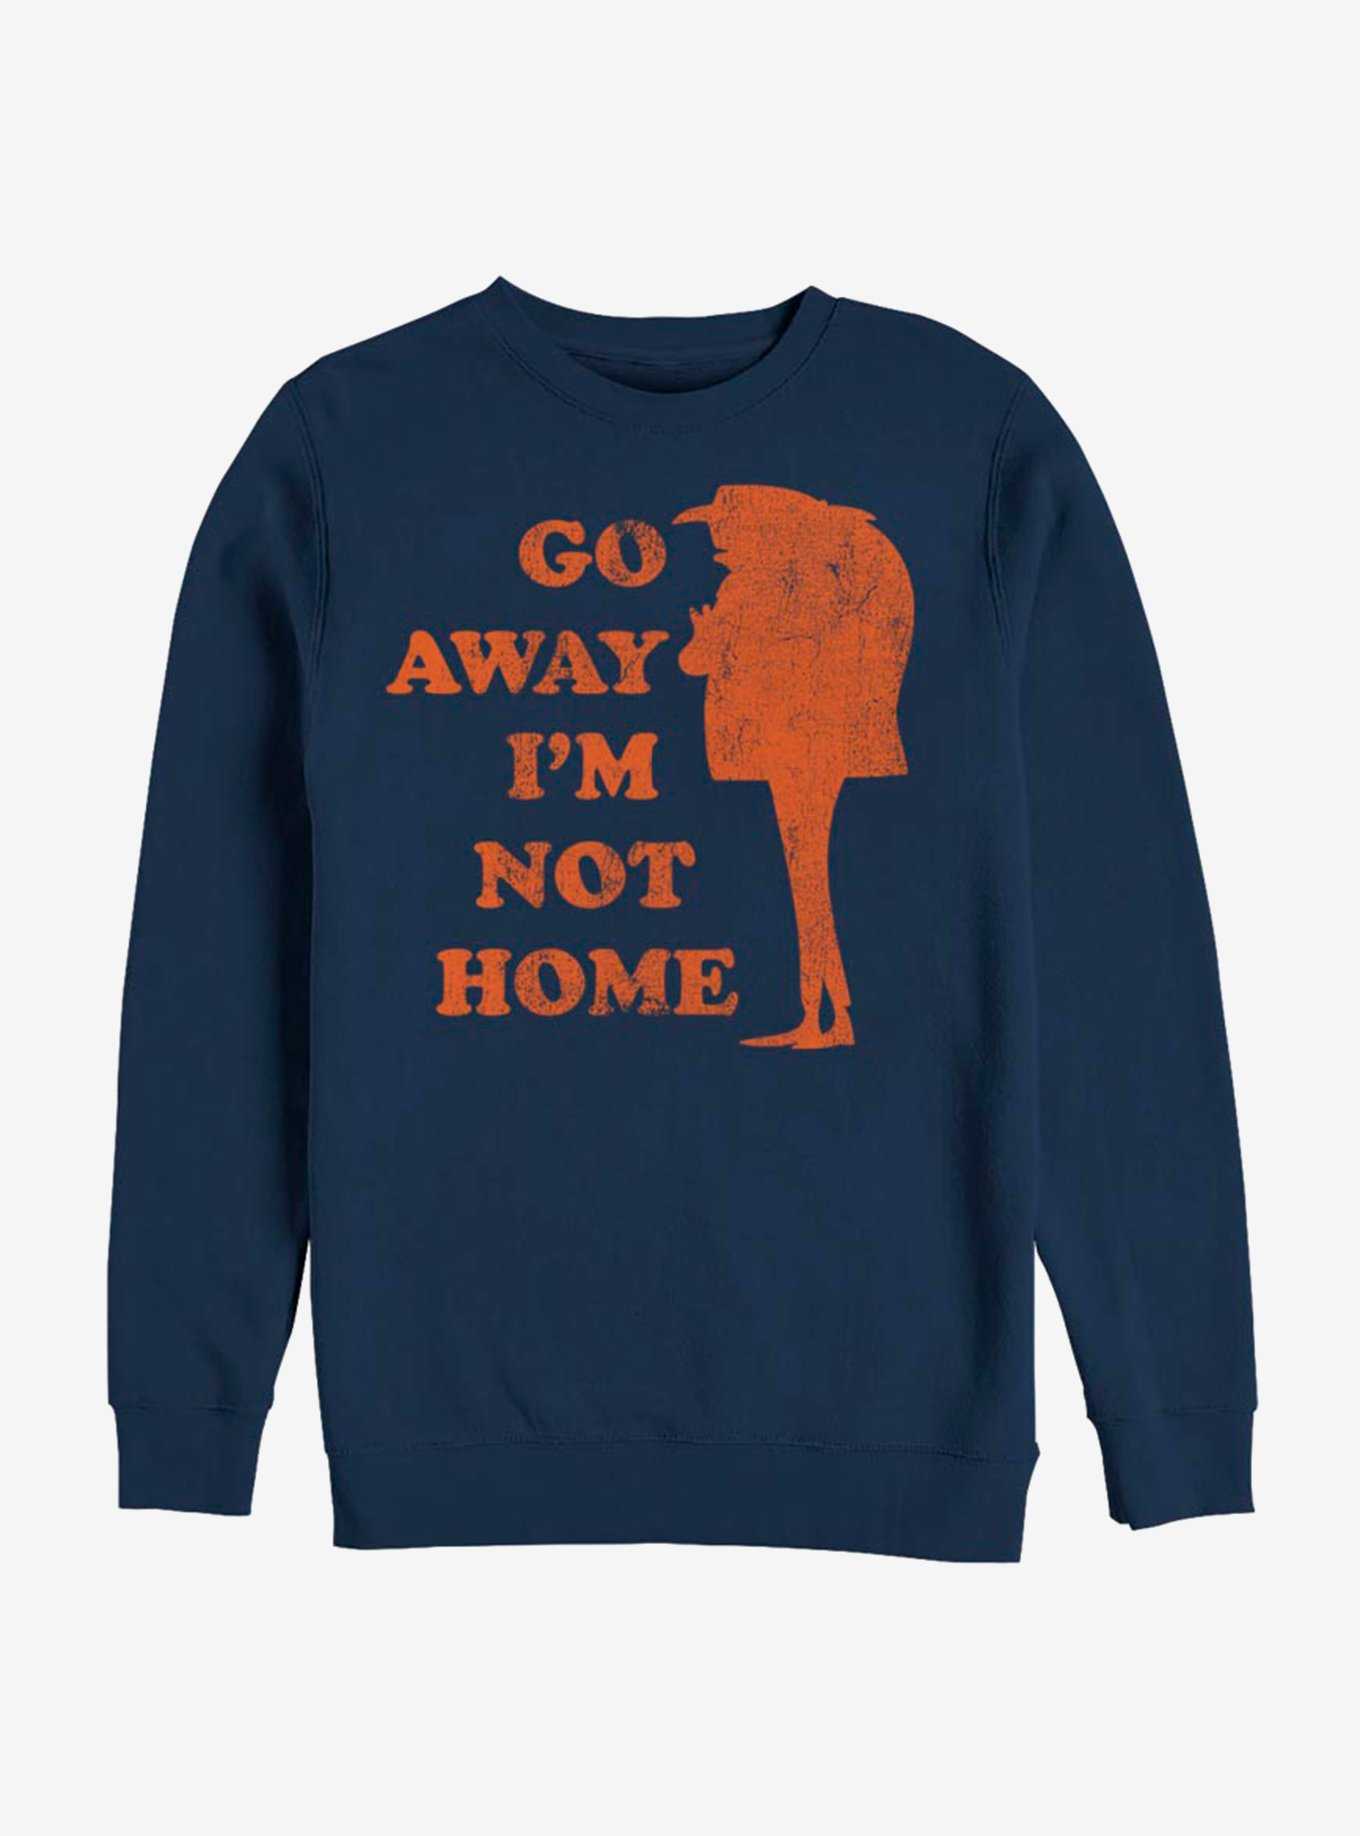 Despicable Me Minions Home Sweatshirt, , hi-res